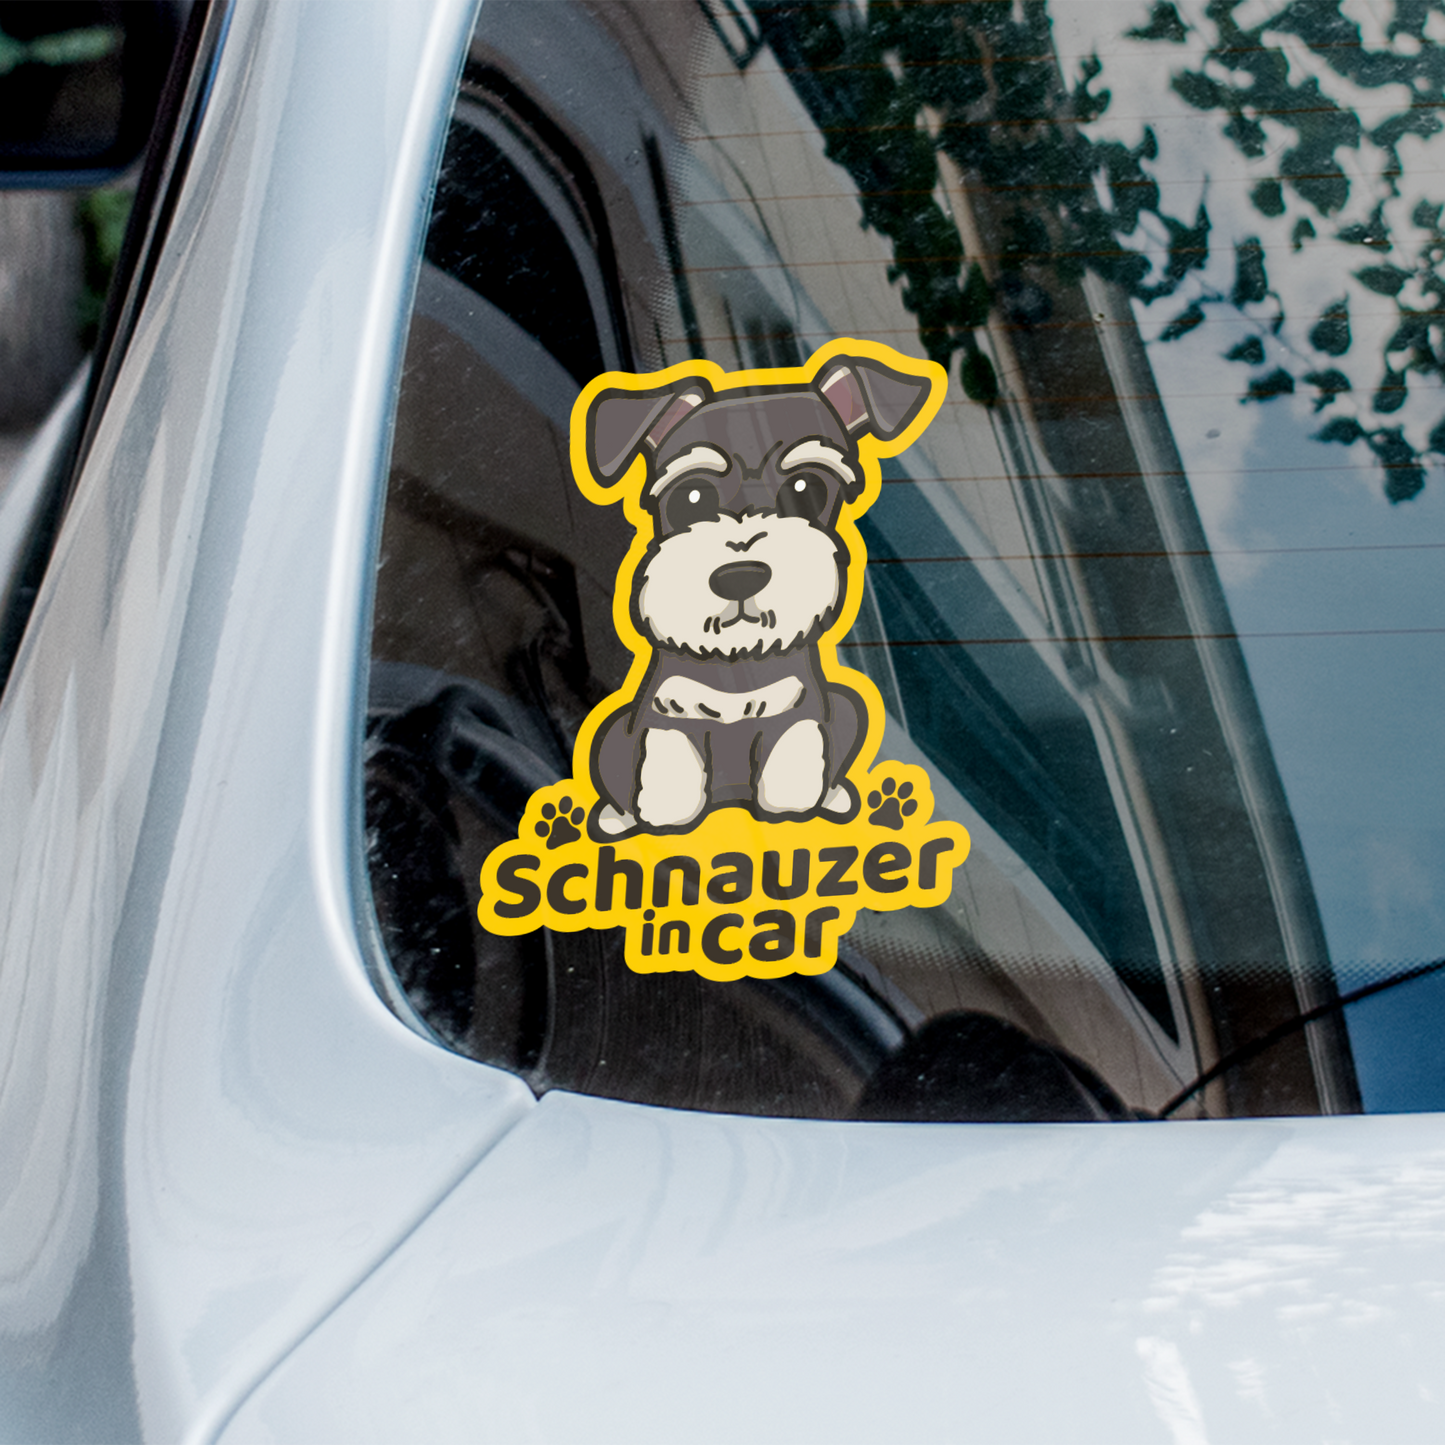 Schnauzer Car Sticker, Cute Schnauzer Dog Vinyl Sticker, Sticks On The Inside Facing Out